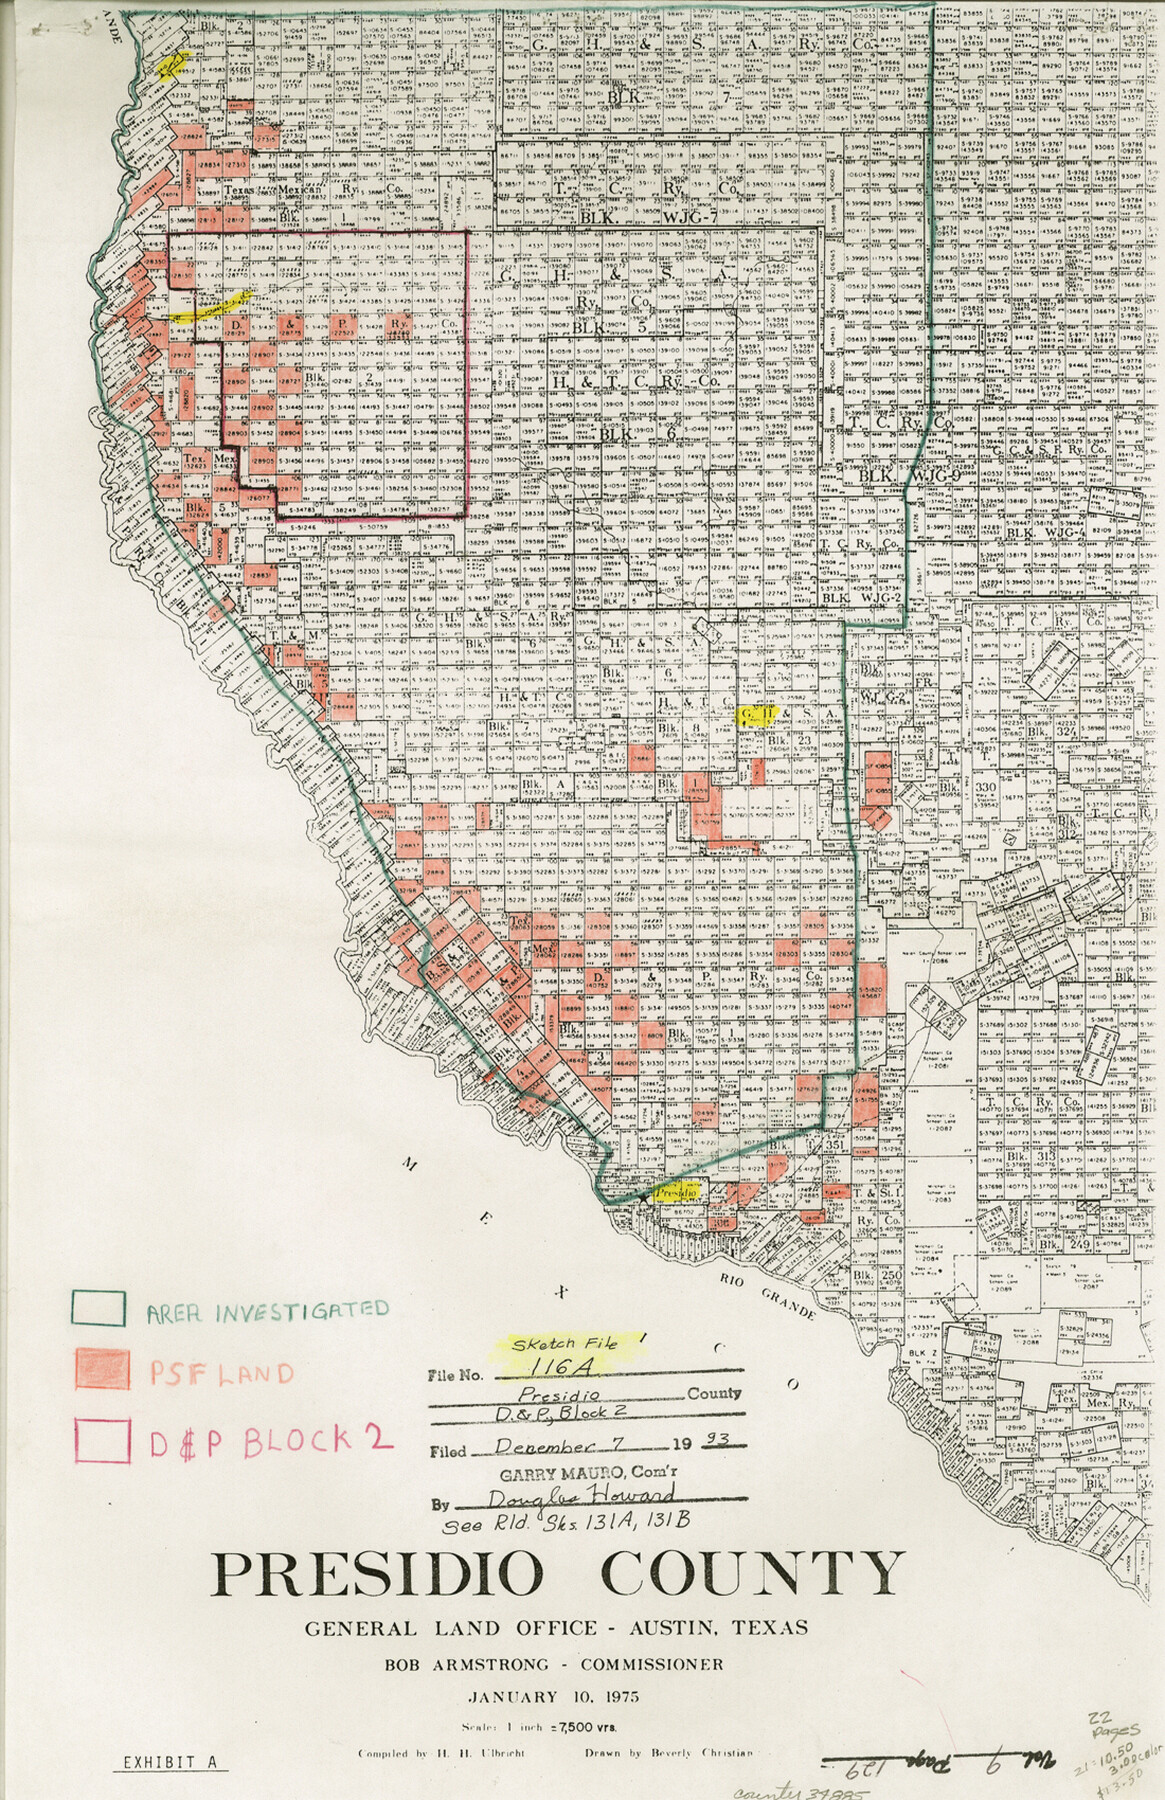 34885, Presidio County Sketch File 116A, General Map Collection